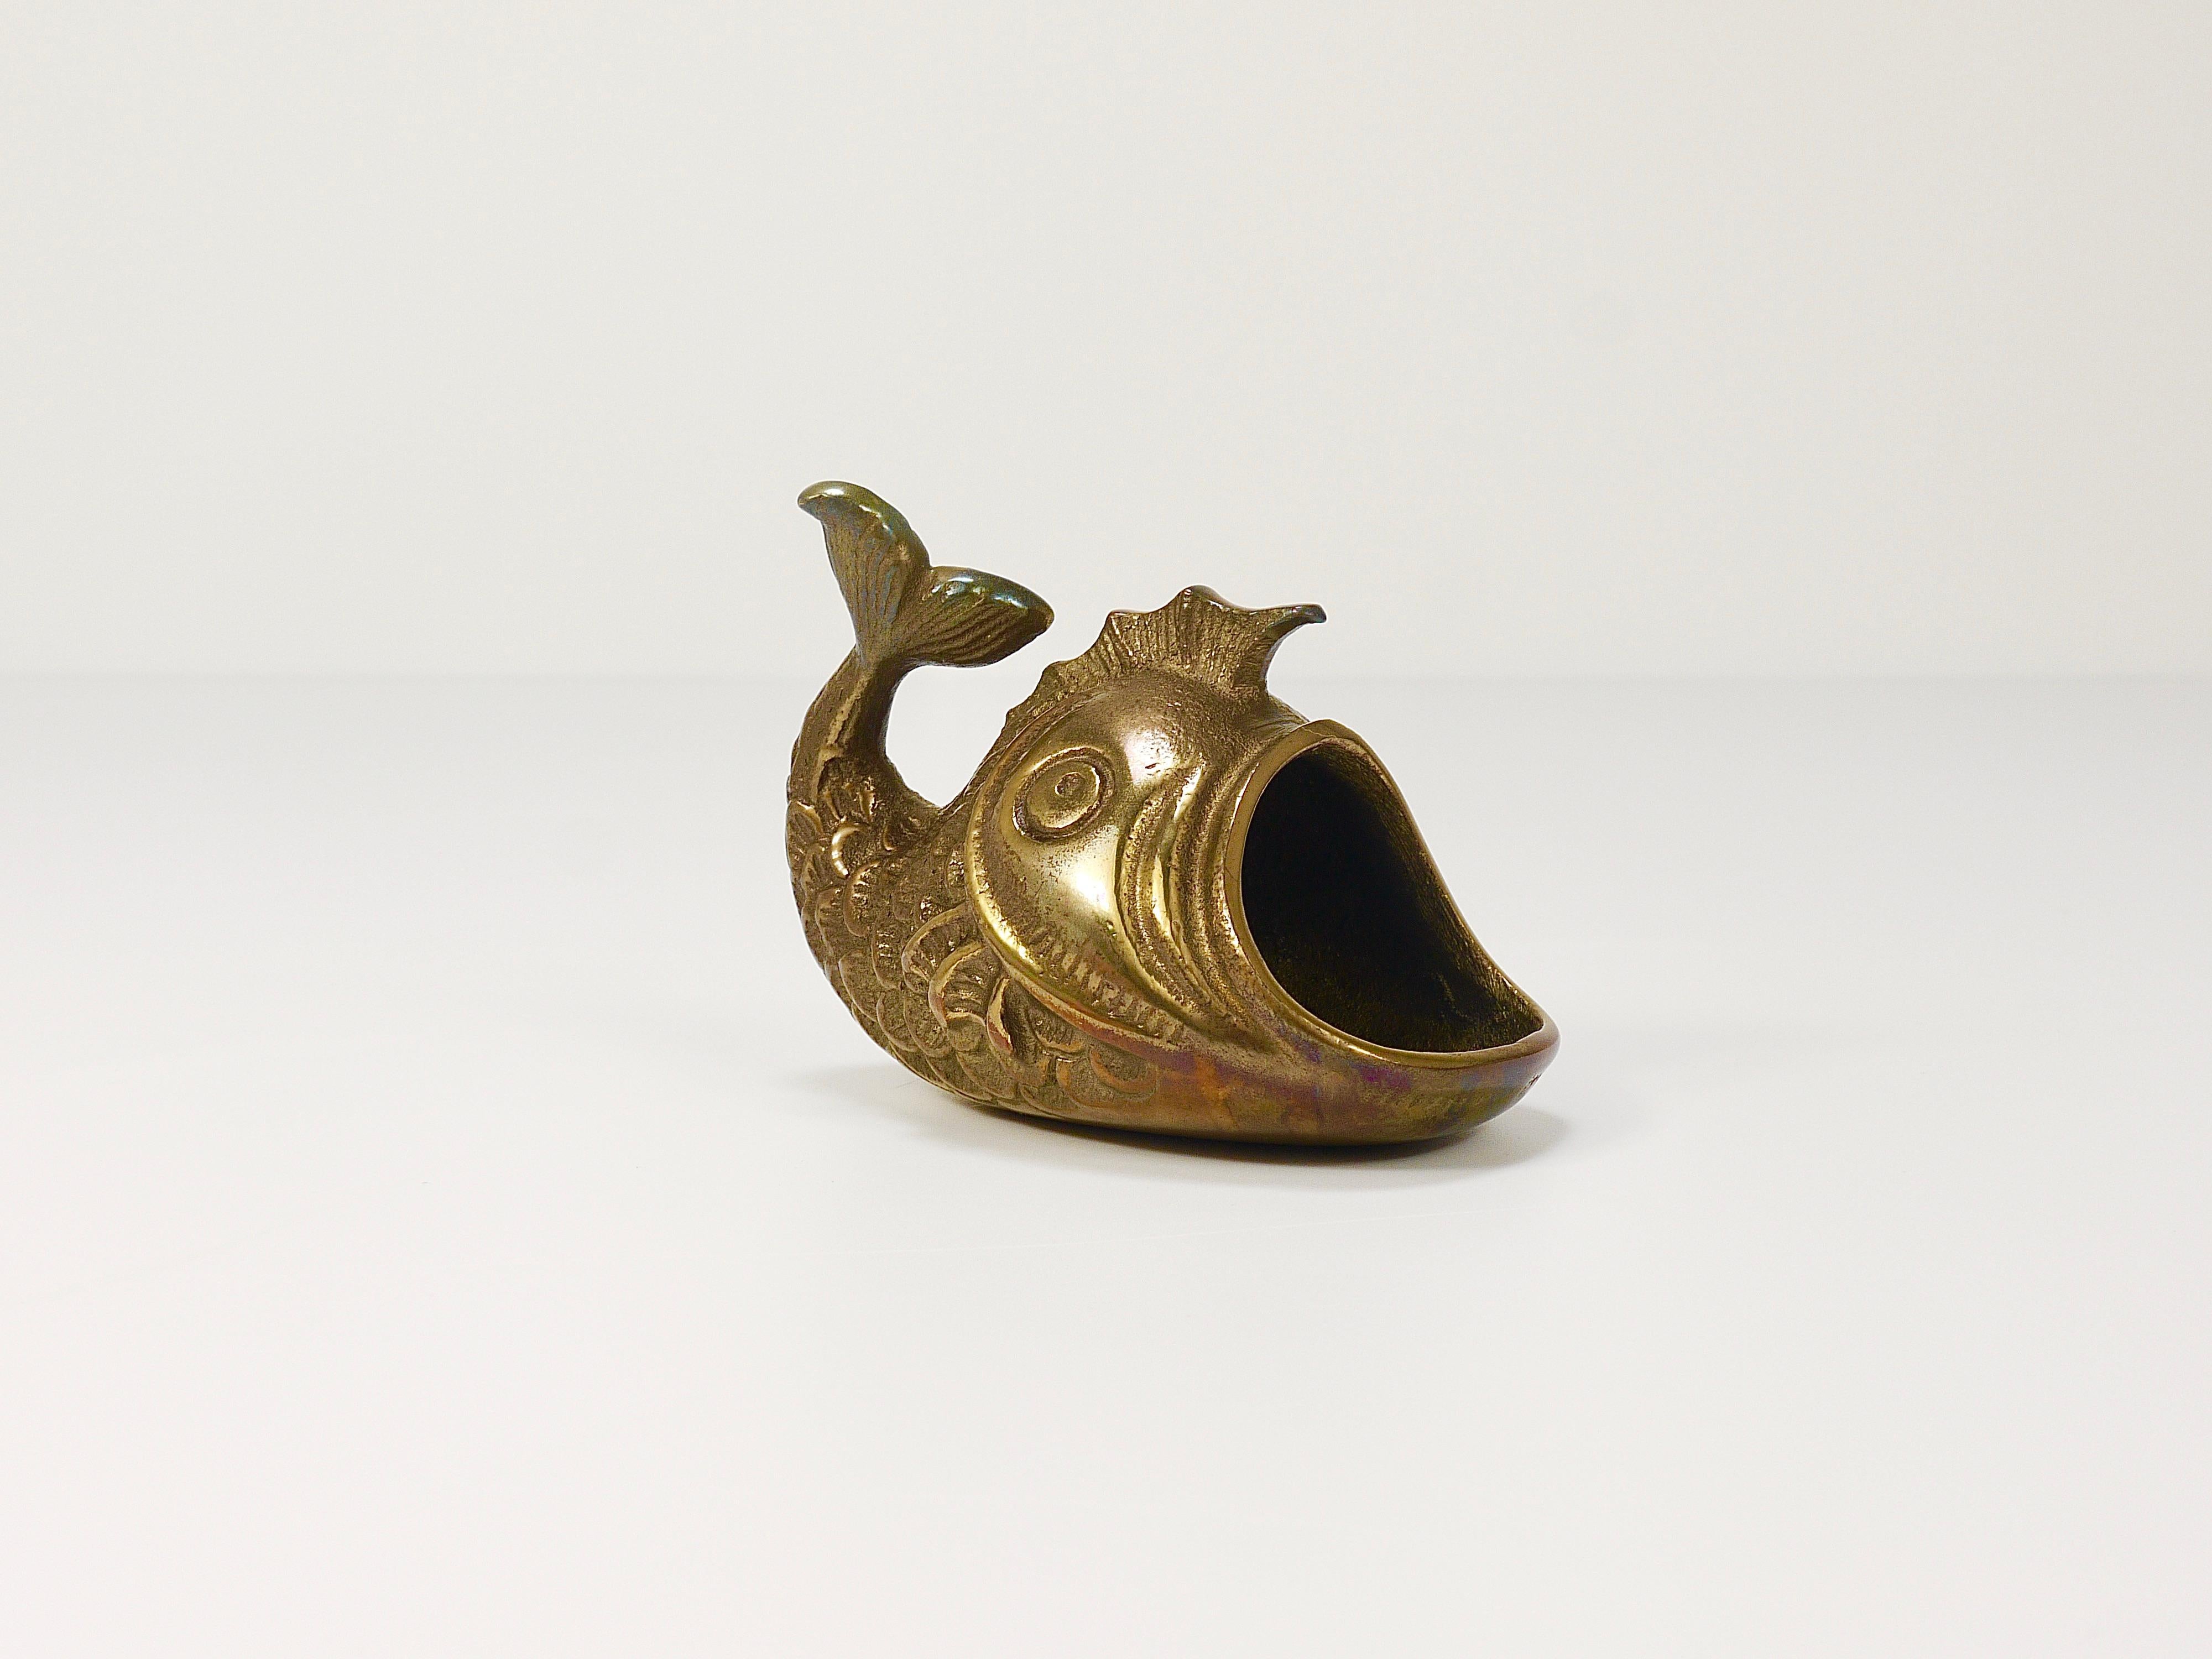 Walter Bosse Midcentury Fish Sculpture Brass Ashtray, Austria, 1950s For Sale 10